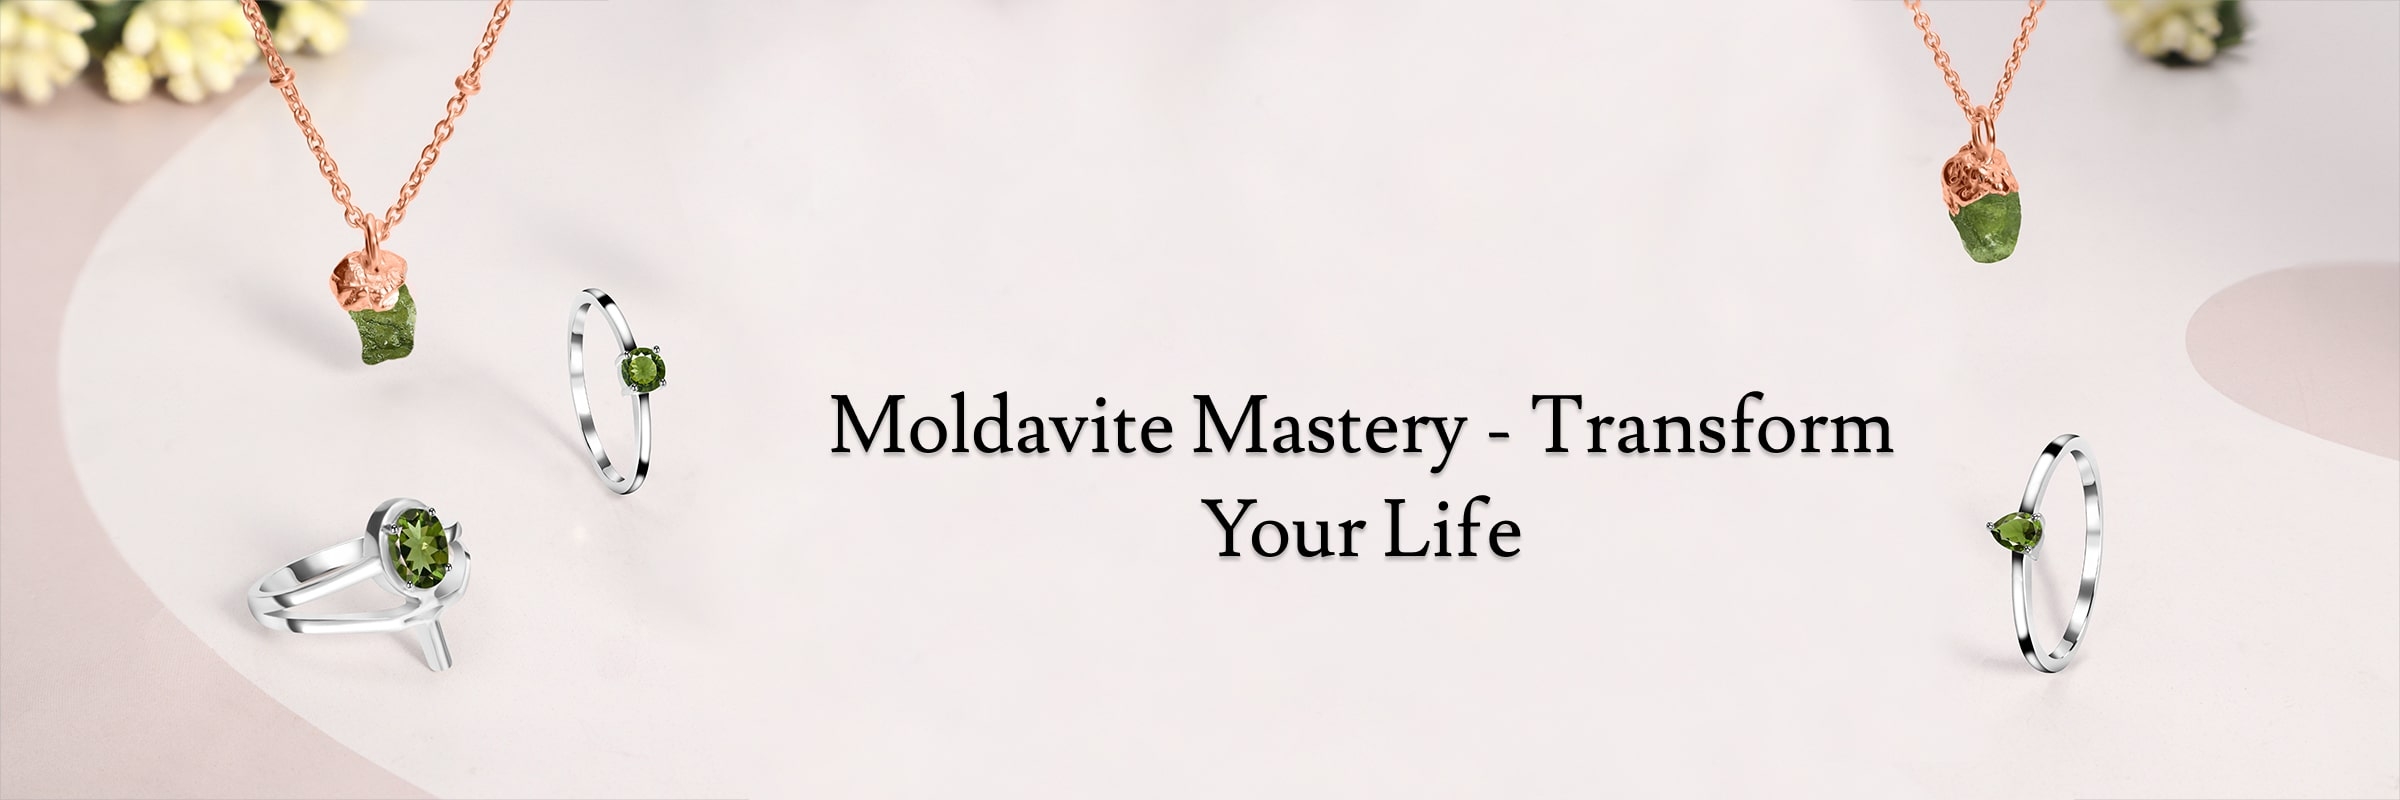 How To Use Moldavite?